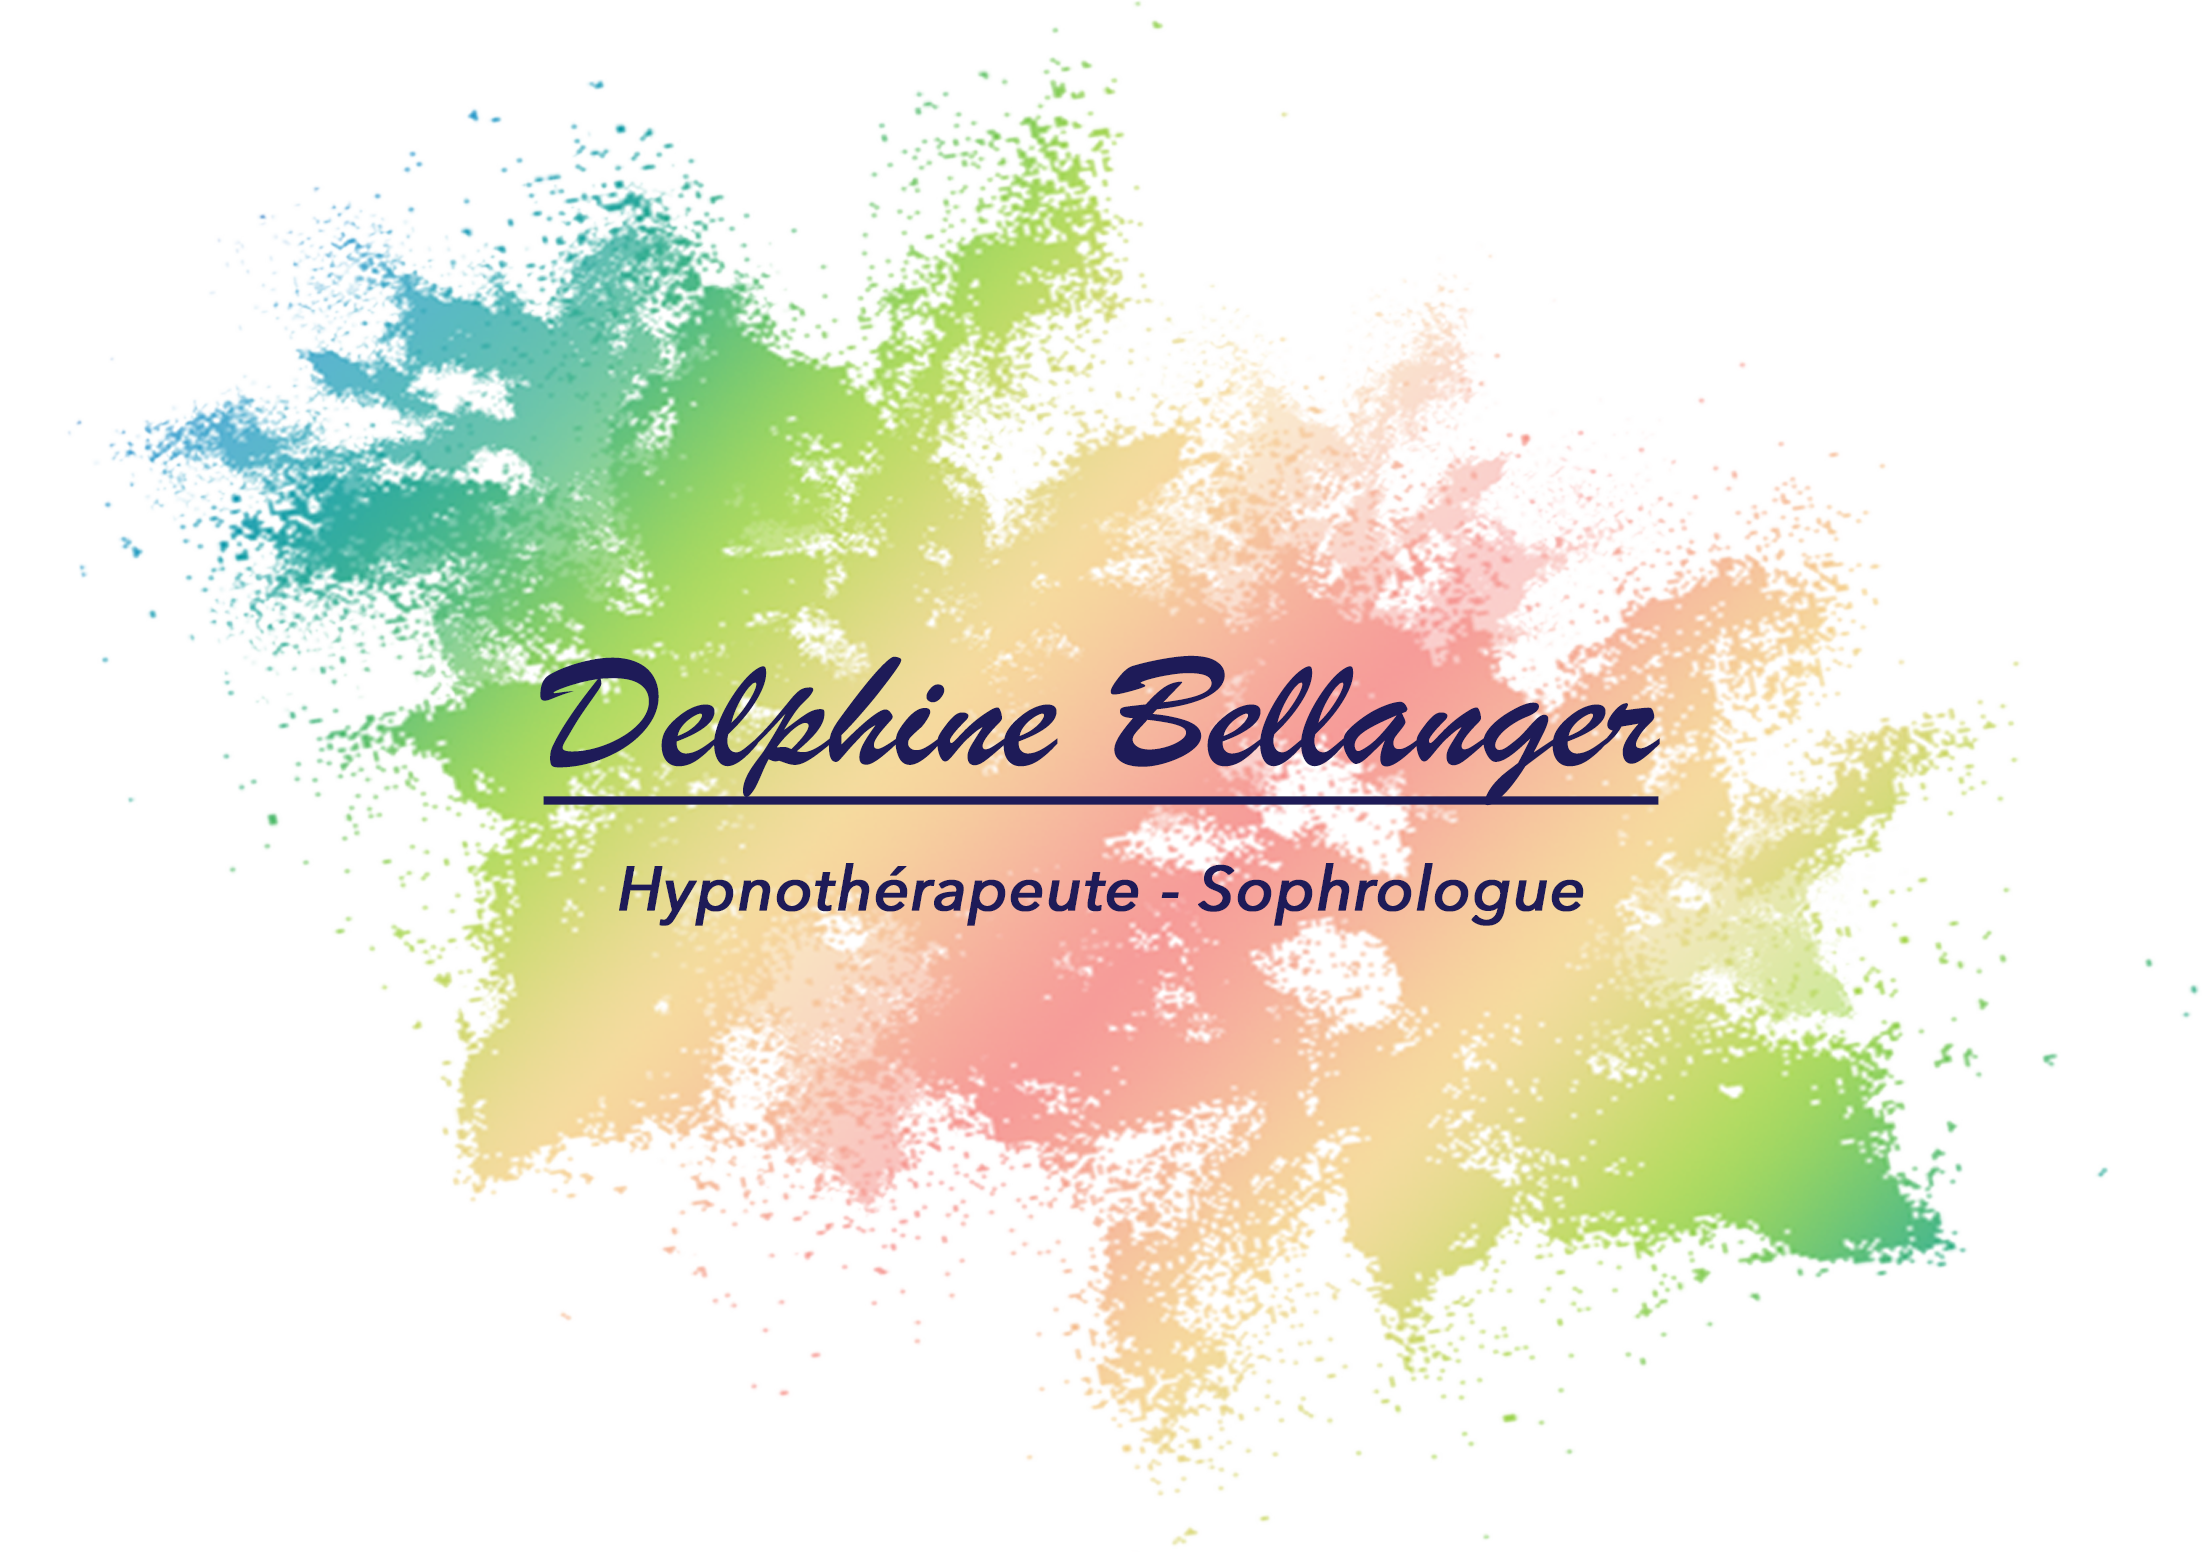 Delphine Bellanger Hypnotherapeute Sophrologue